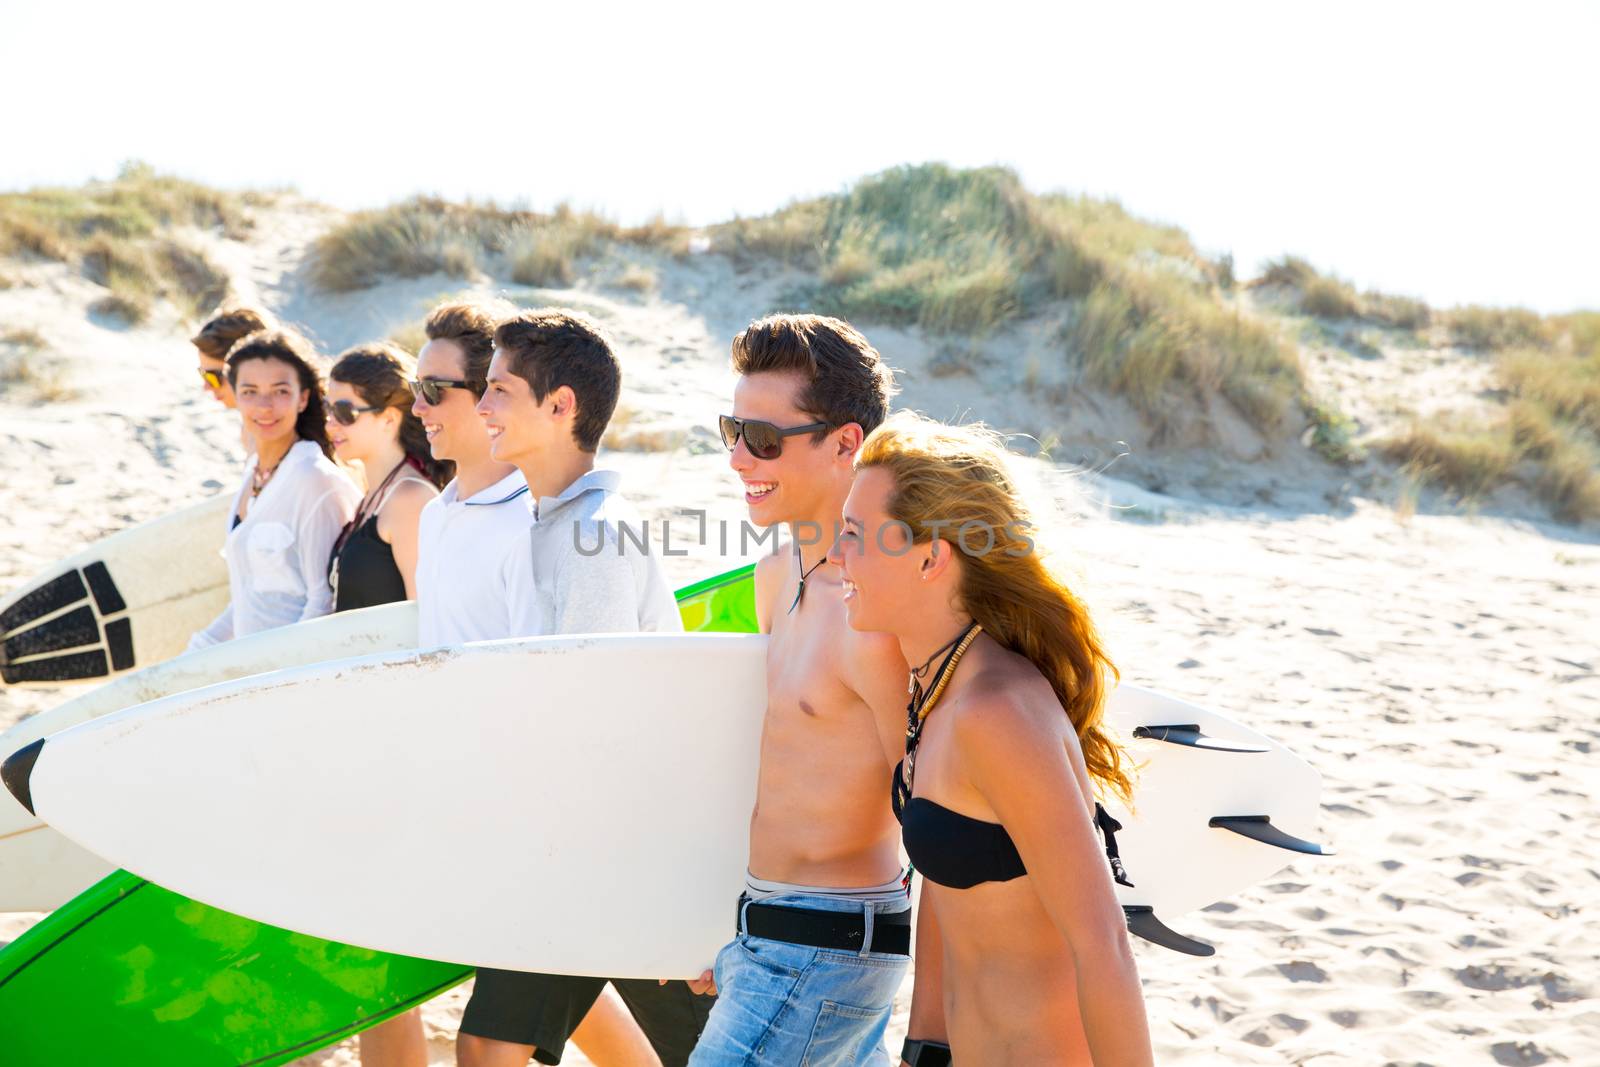 Surfer teen boys and girls group walking on beach sand